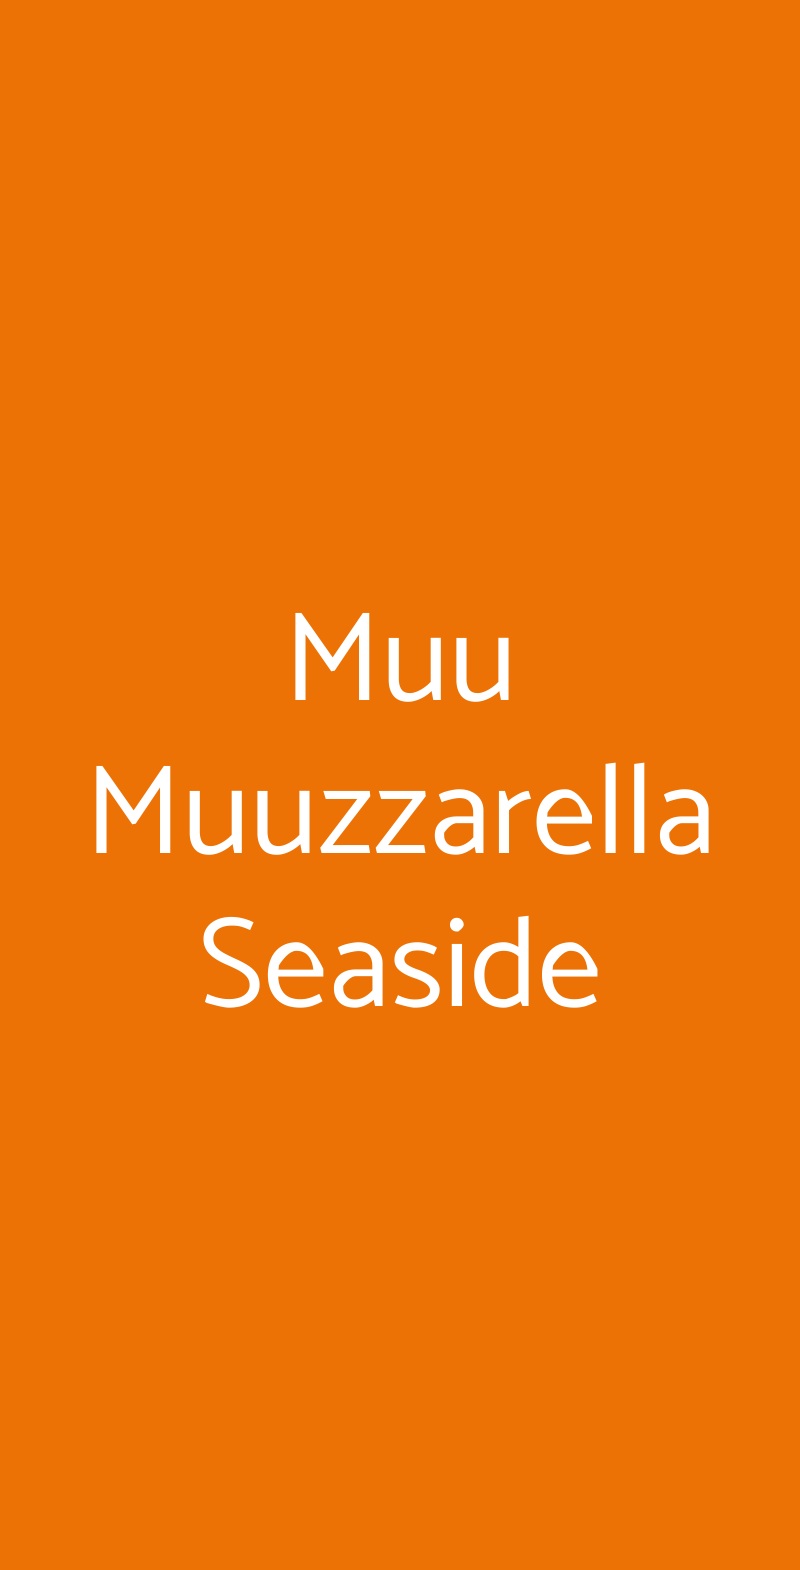 Muu Muuzzarella Seaside Napoli menù 1 pagina